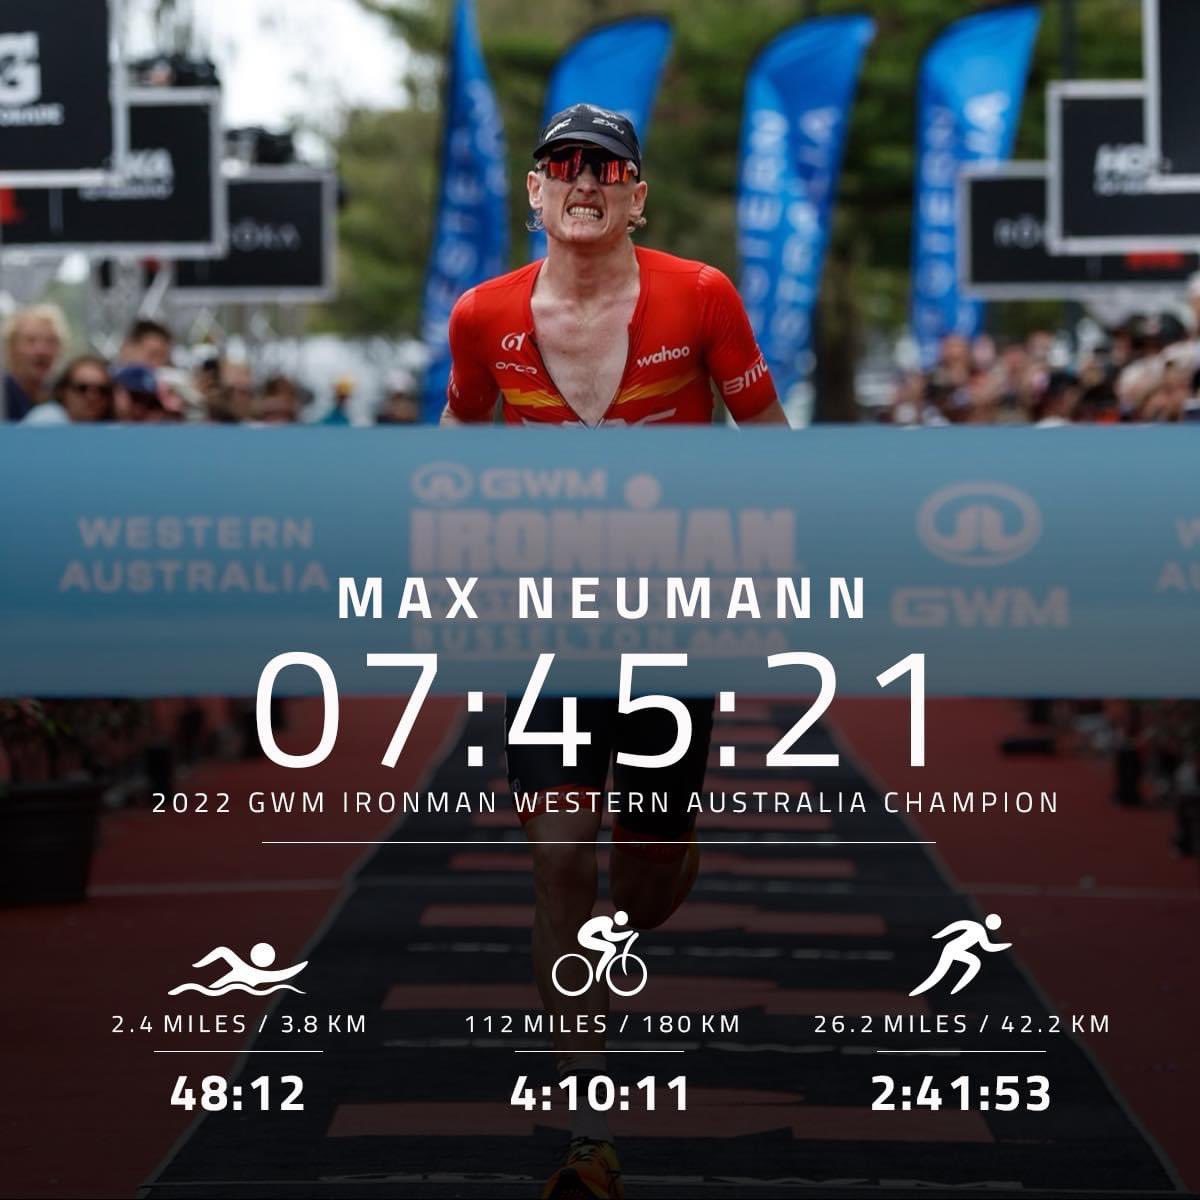 Max Neumann Ironman Western Australia 2022 performance